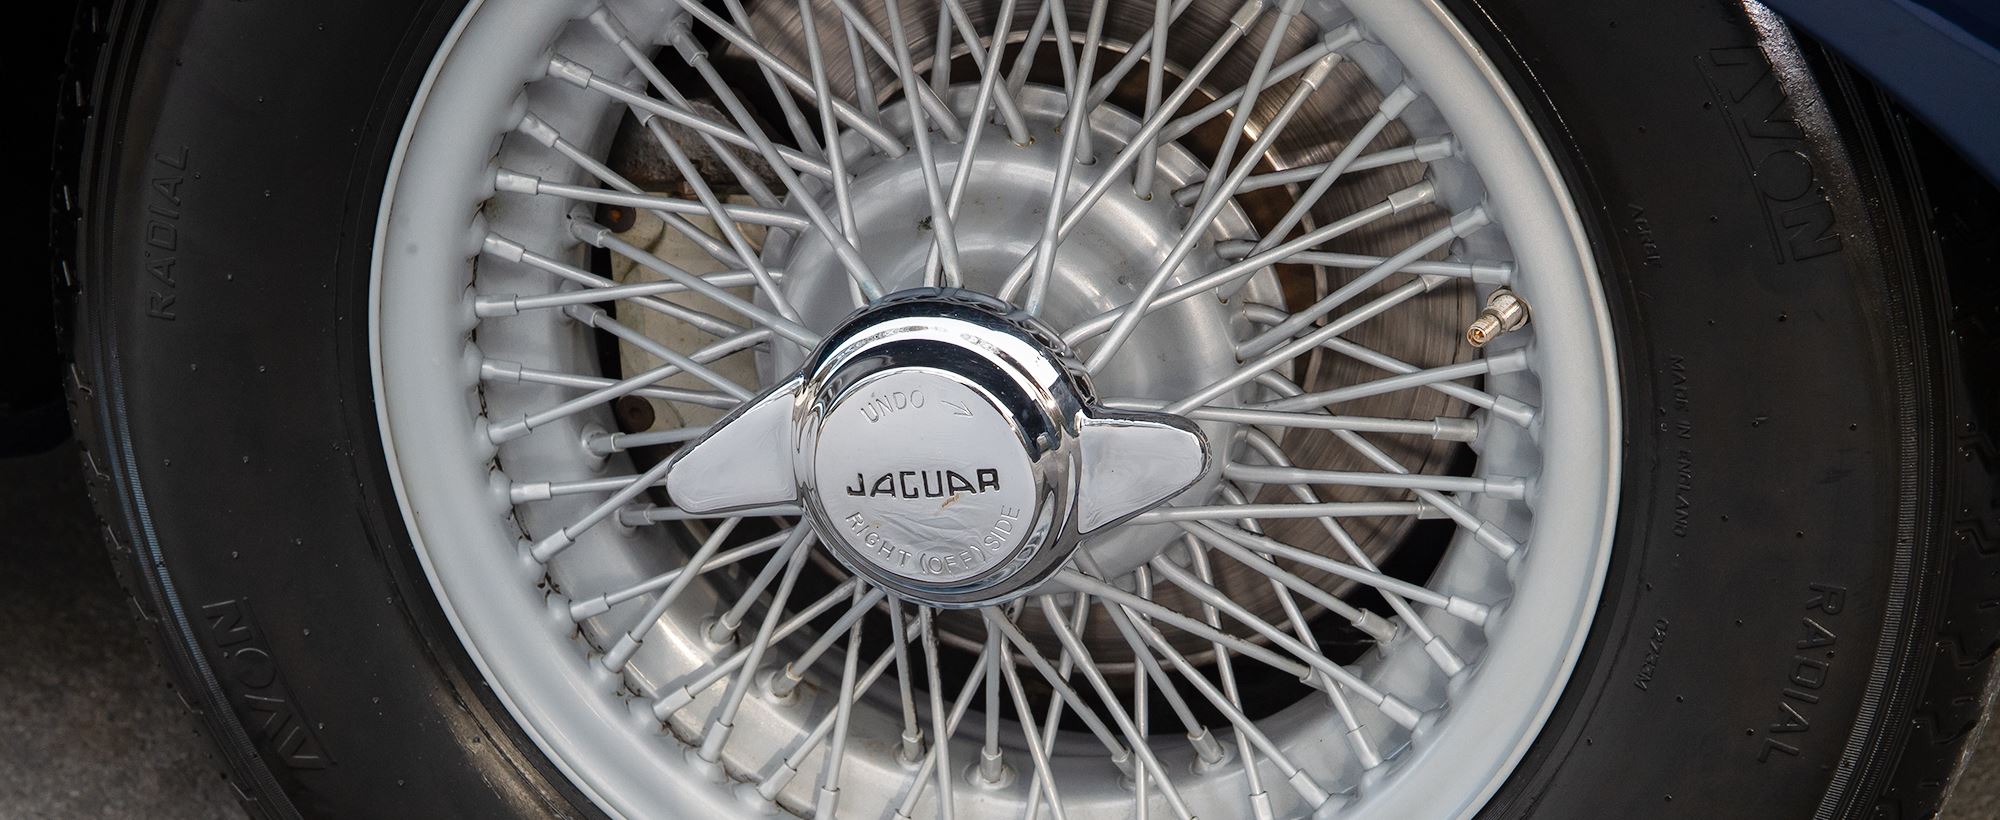 Jaguar E Type 016.jpg